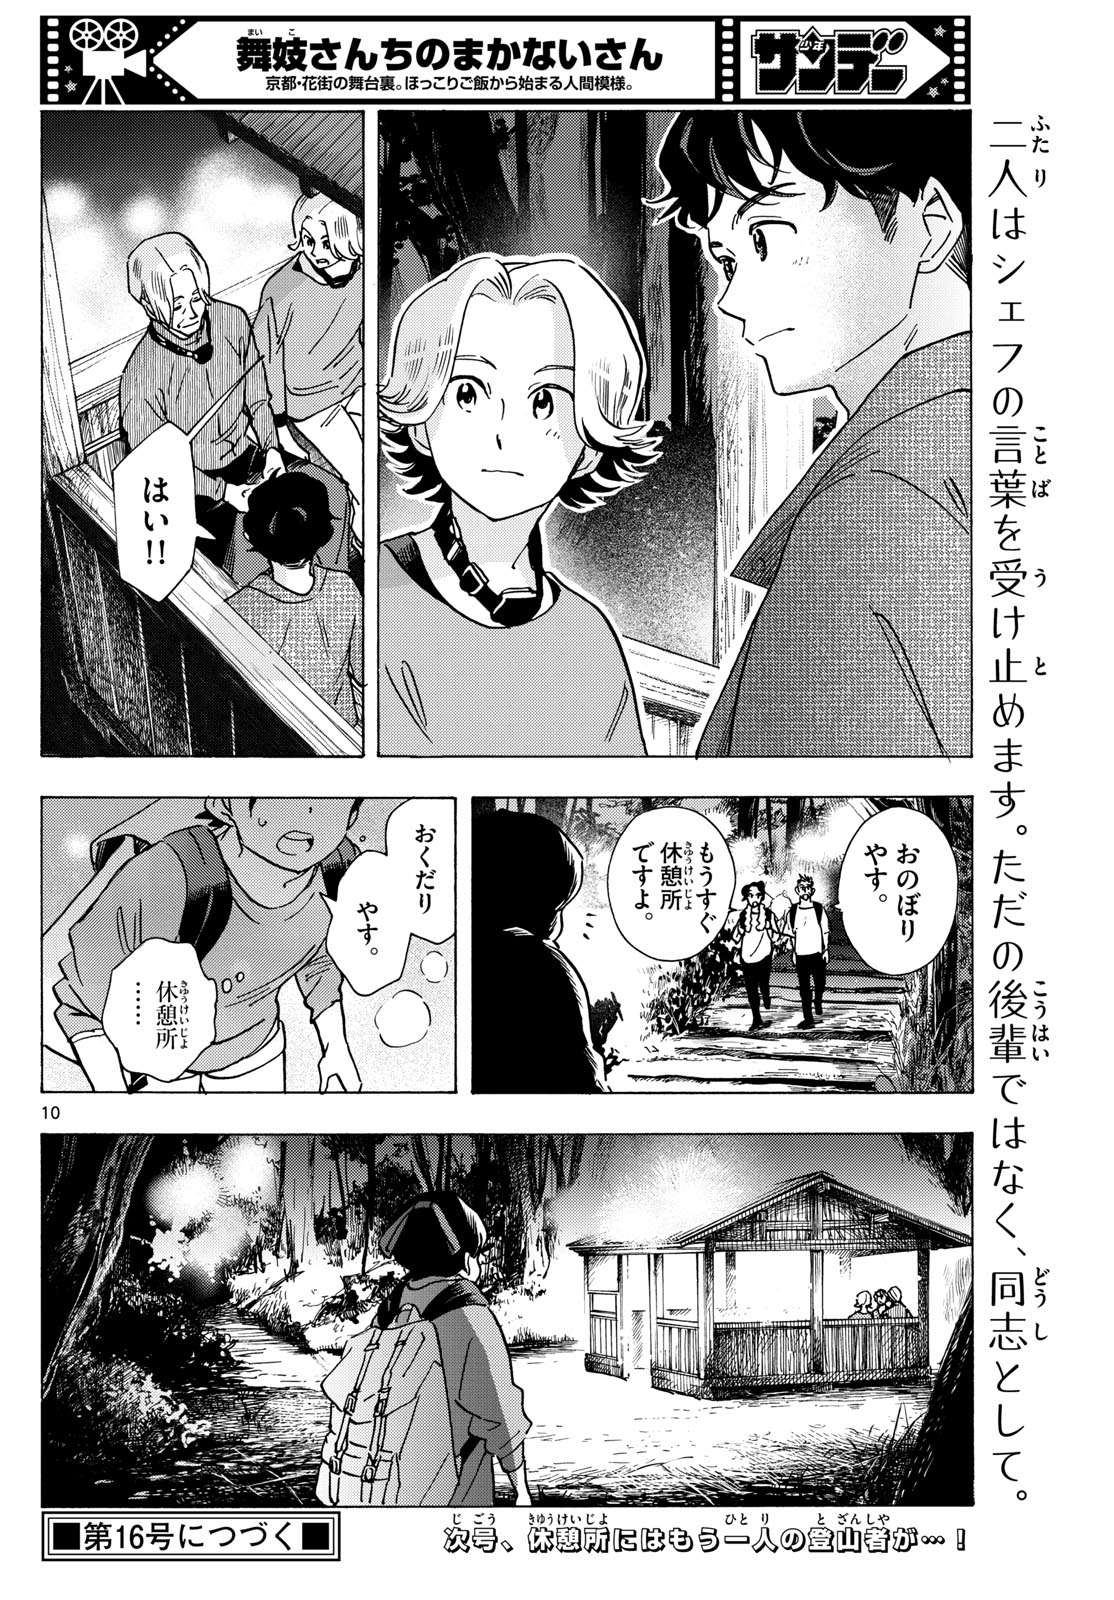 Maiko-san Chi no Makanai-san - Chapter 295 - Page 10